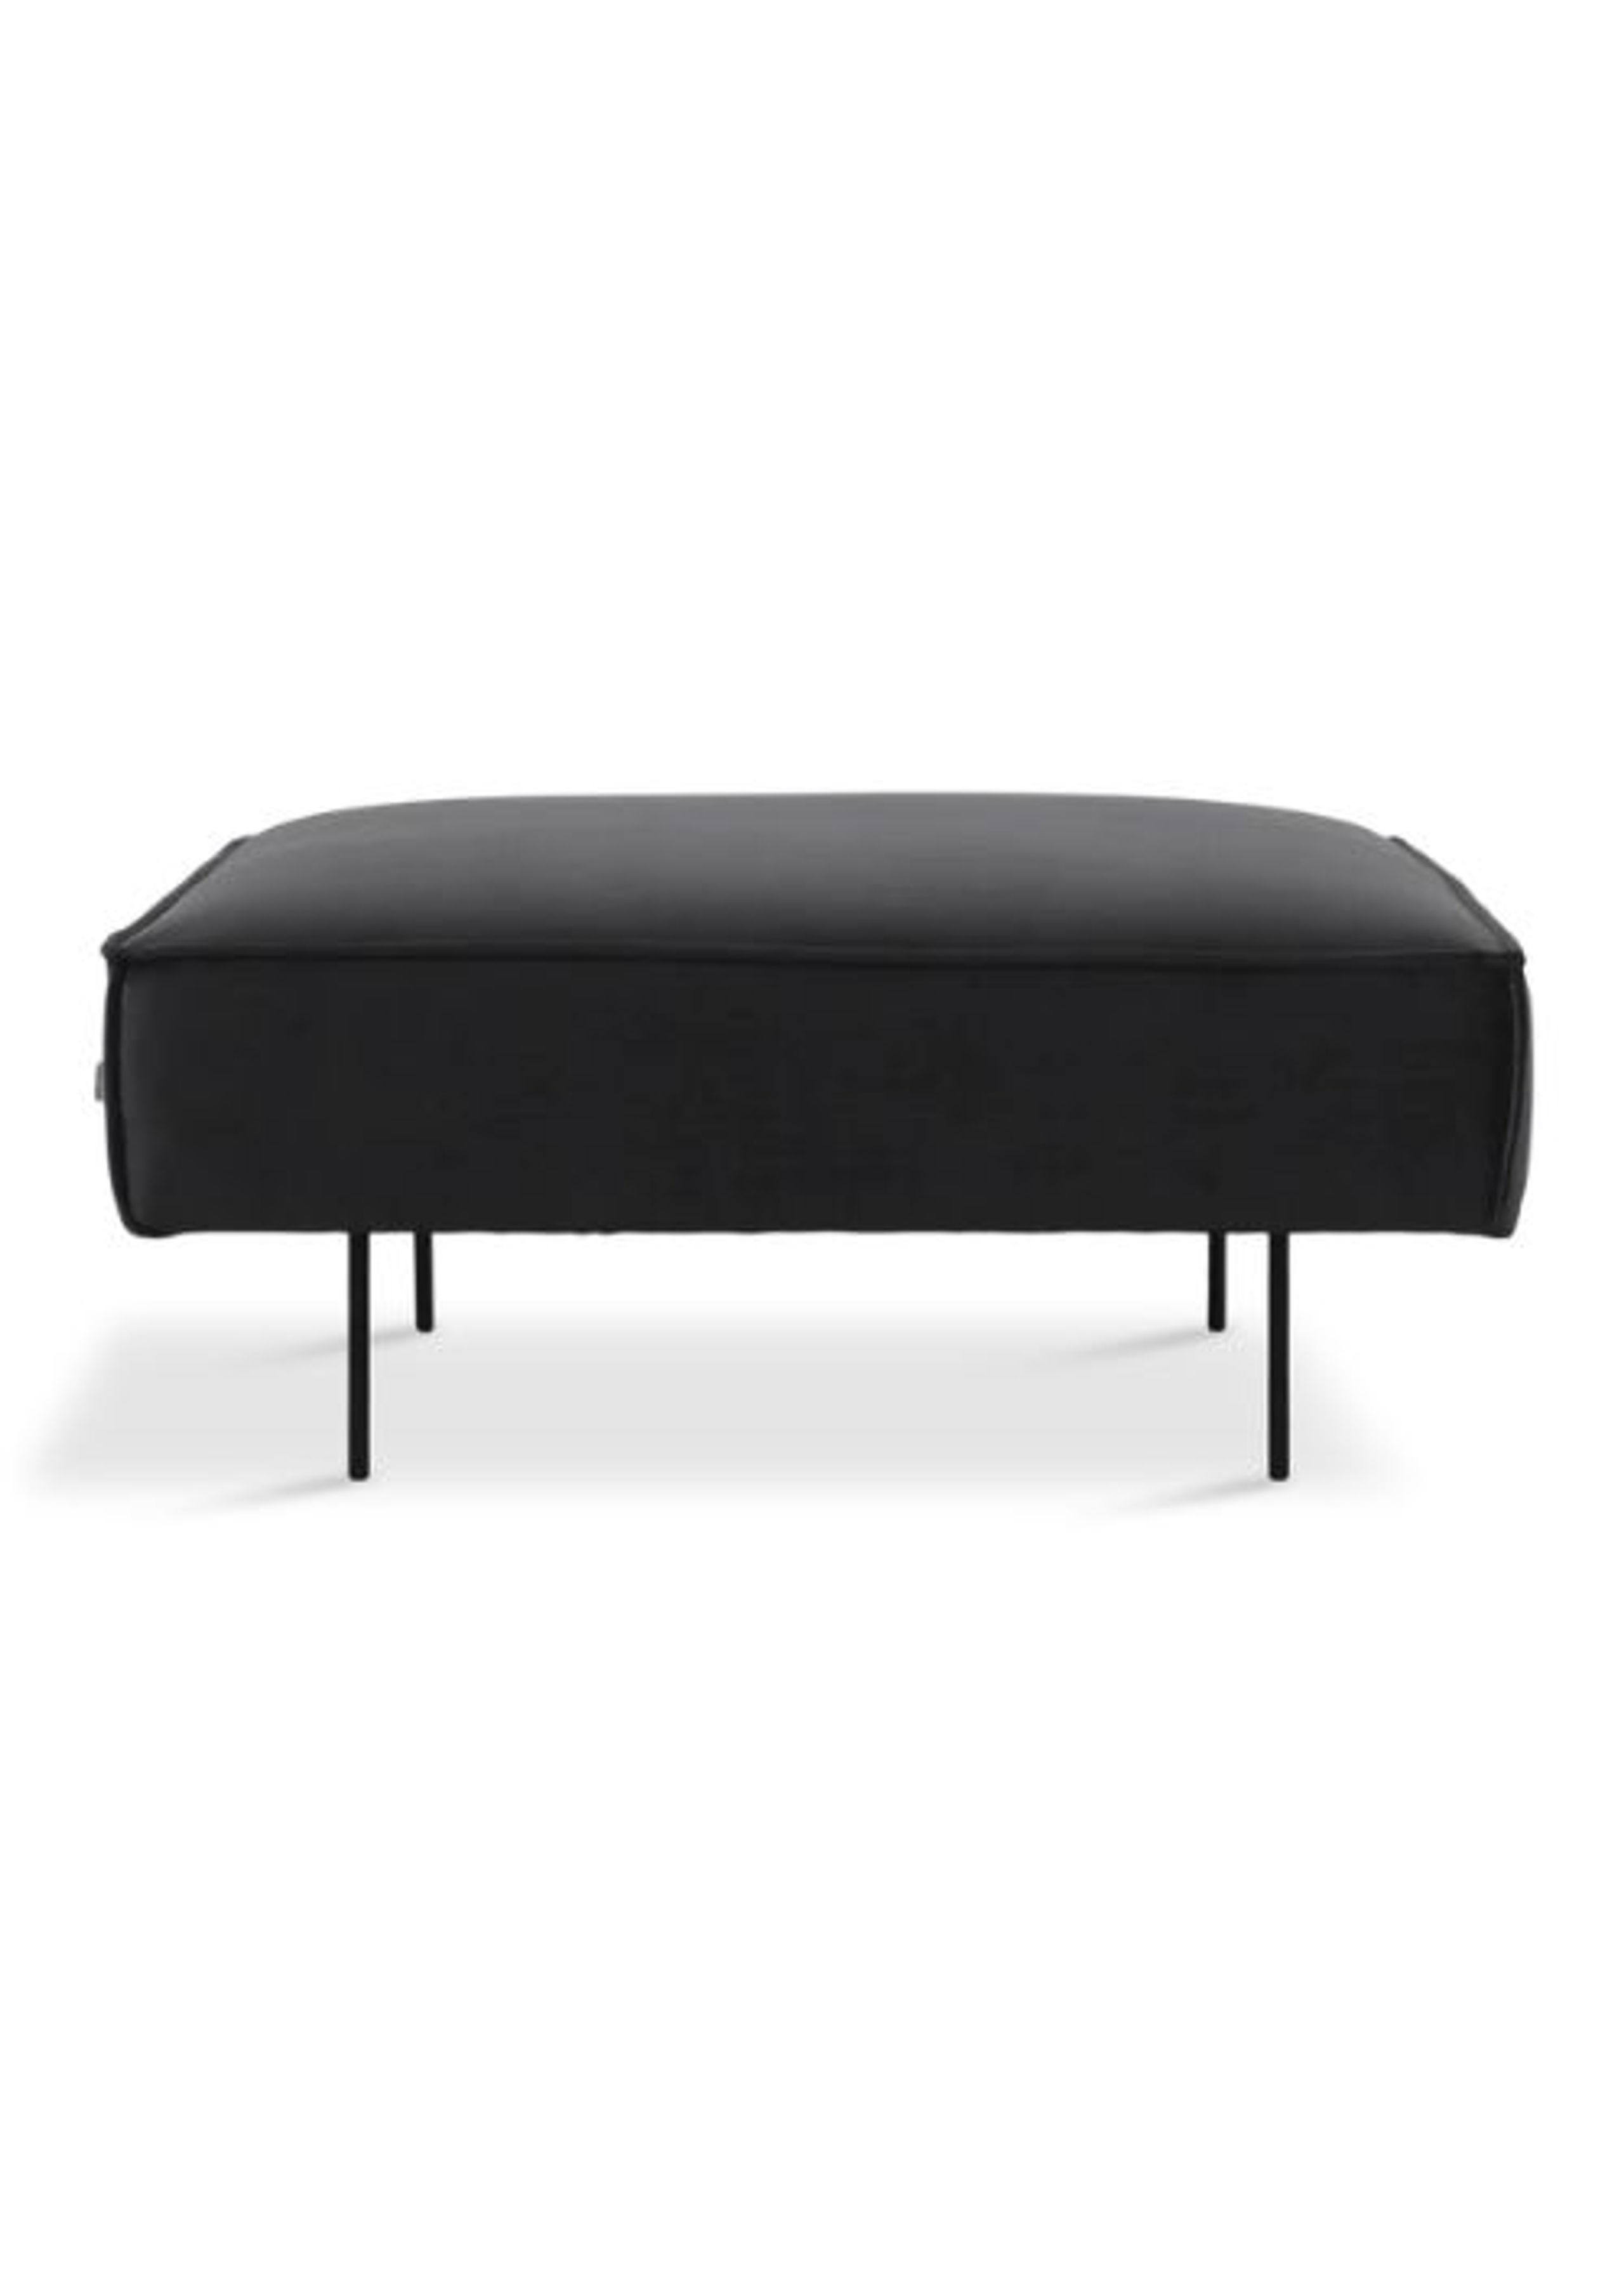 Handvärk - Sofá modular - The Modular Sofa - Ottoman by Emil Thorup - Ottoman - Dark Grey